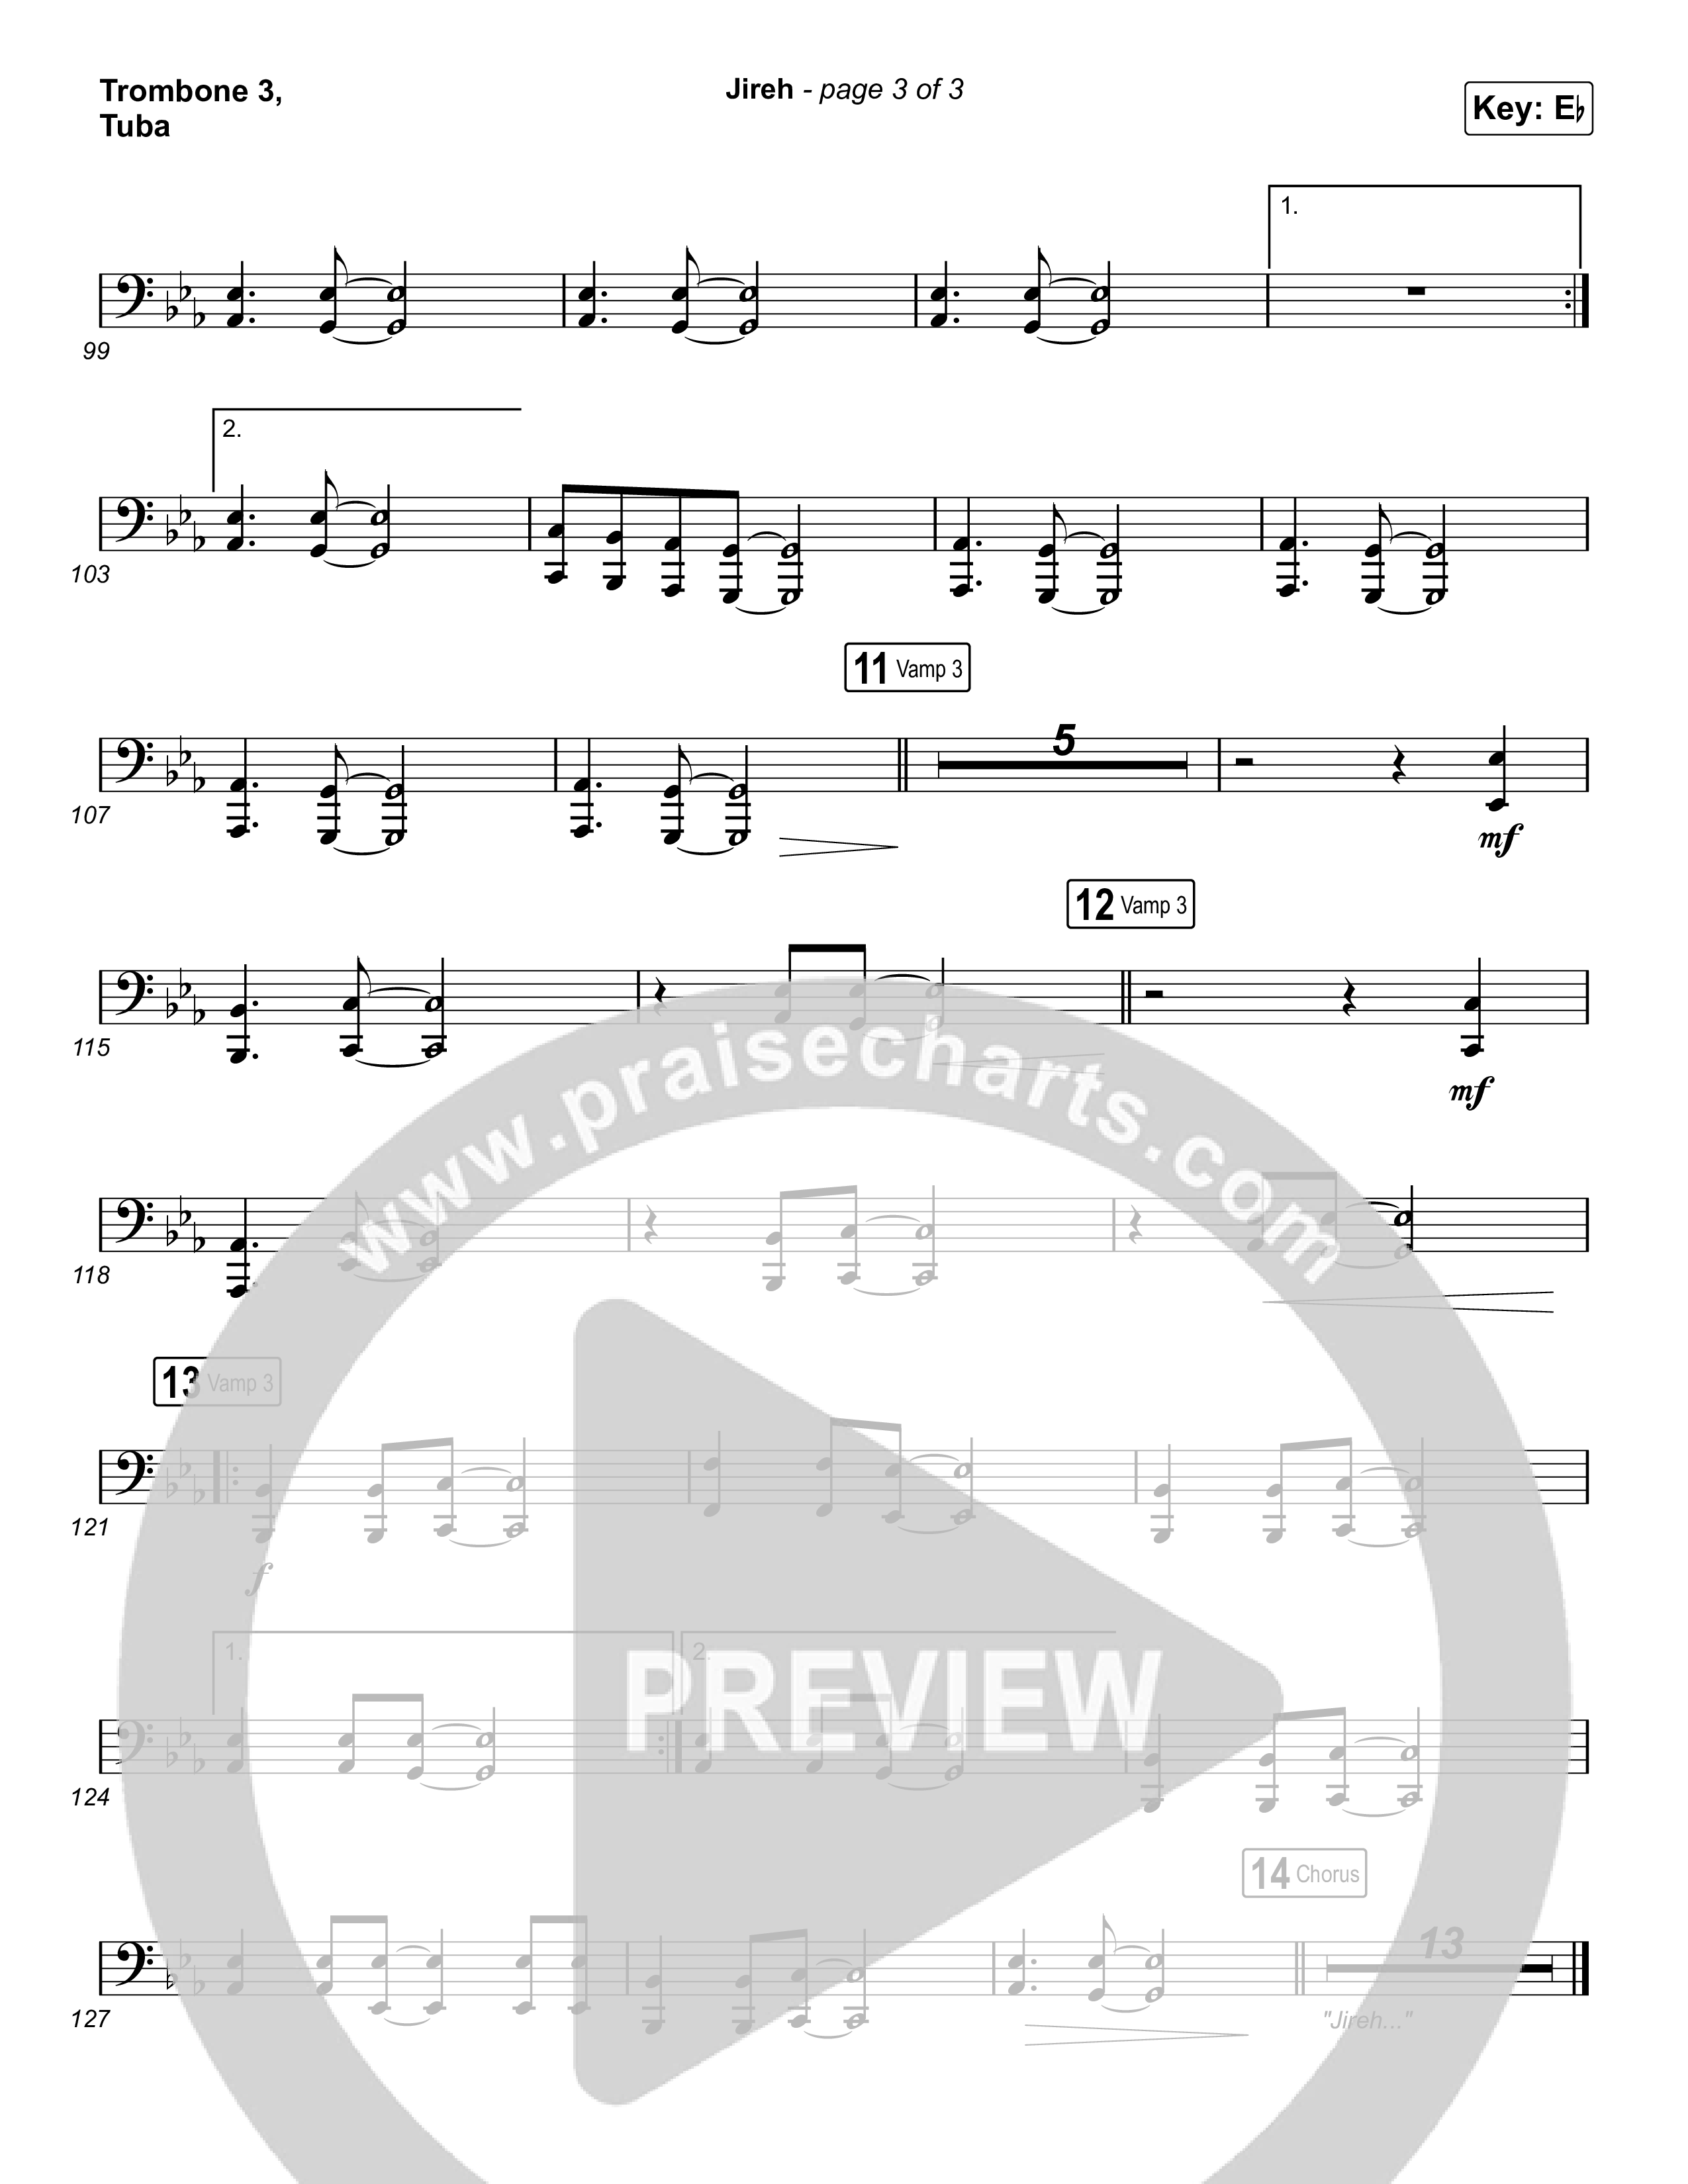 Jireh (Choral Anthem SATB) Trombone 3/Tuba (Maverick City Music / Elevation Worship / Arr. Luke Gambill)